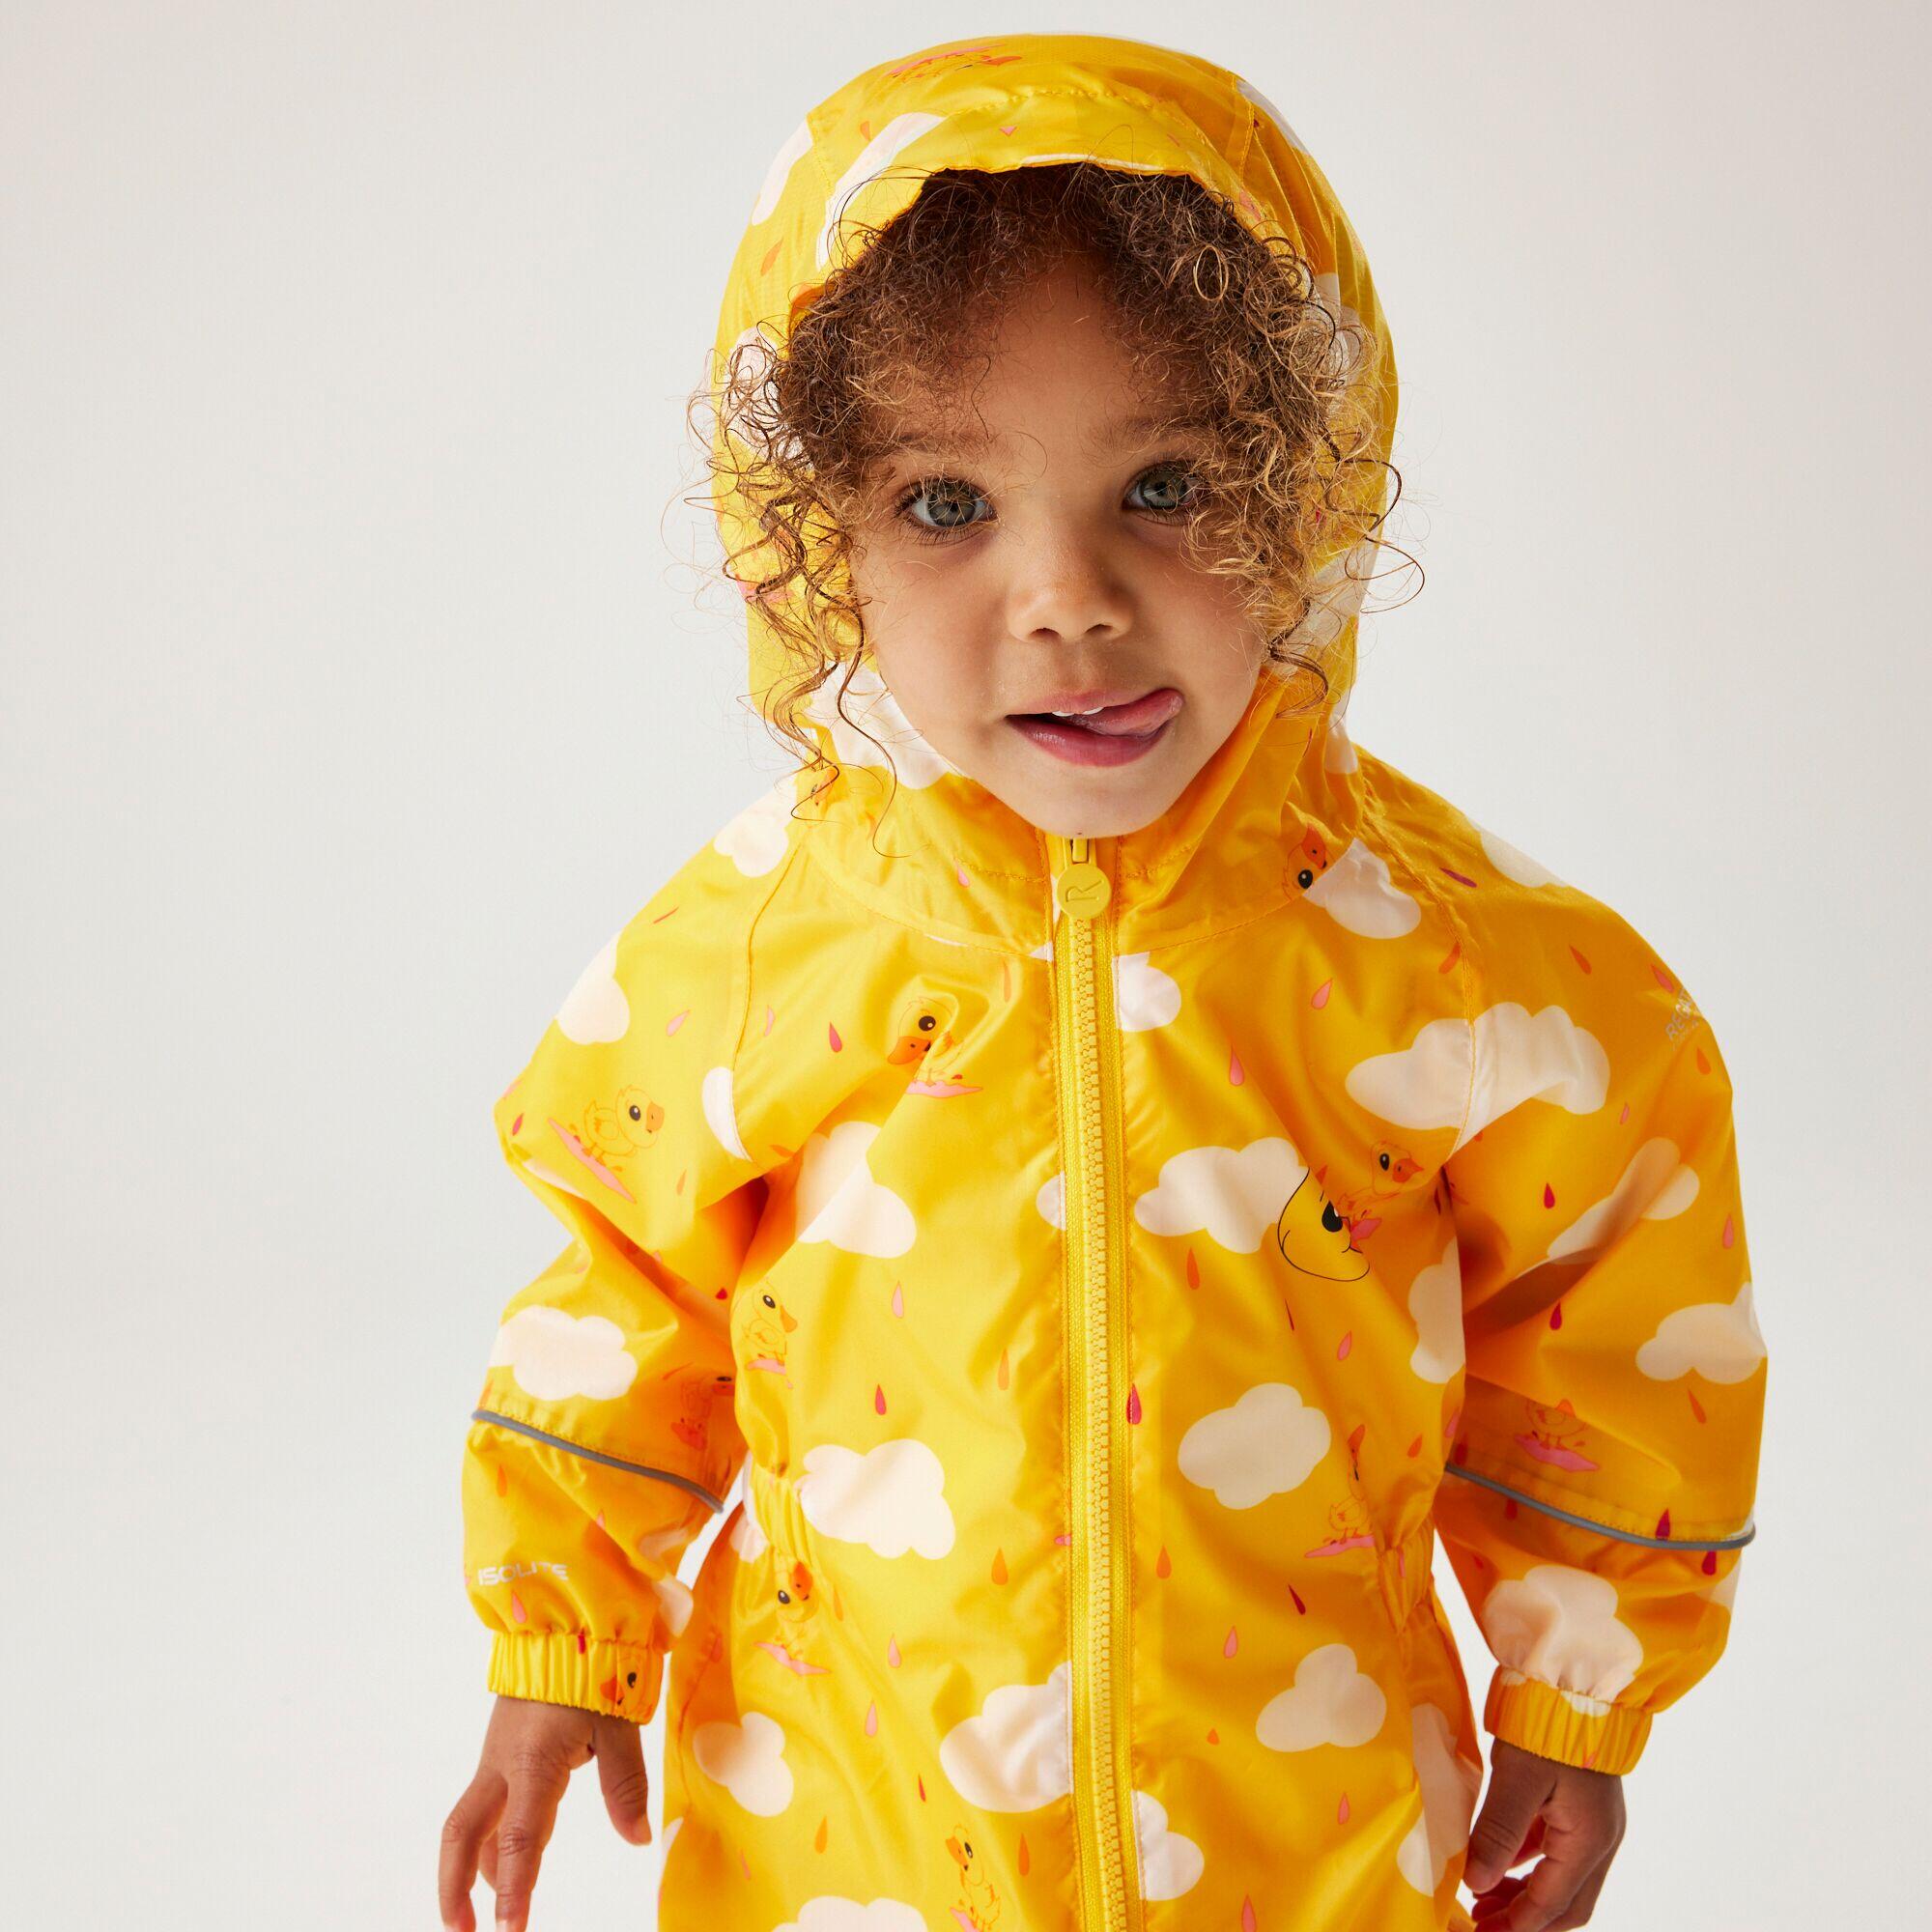 Kids' Pobble Waterproof Puddle Suit 4/5